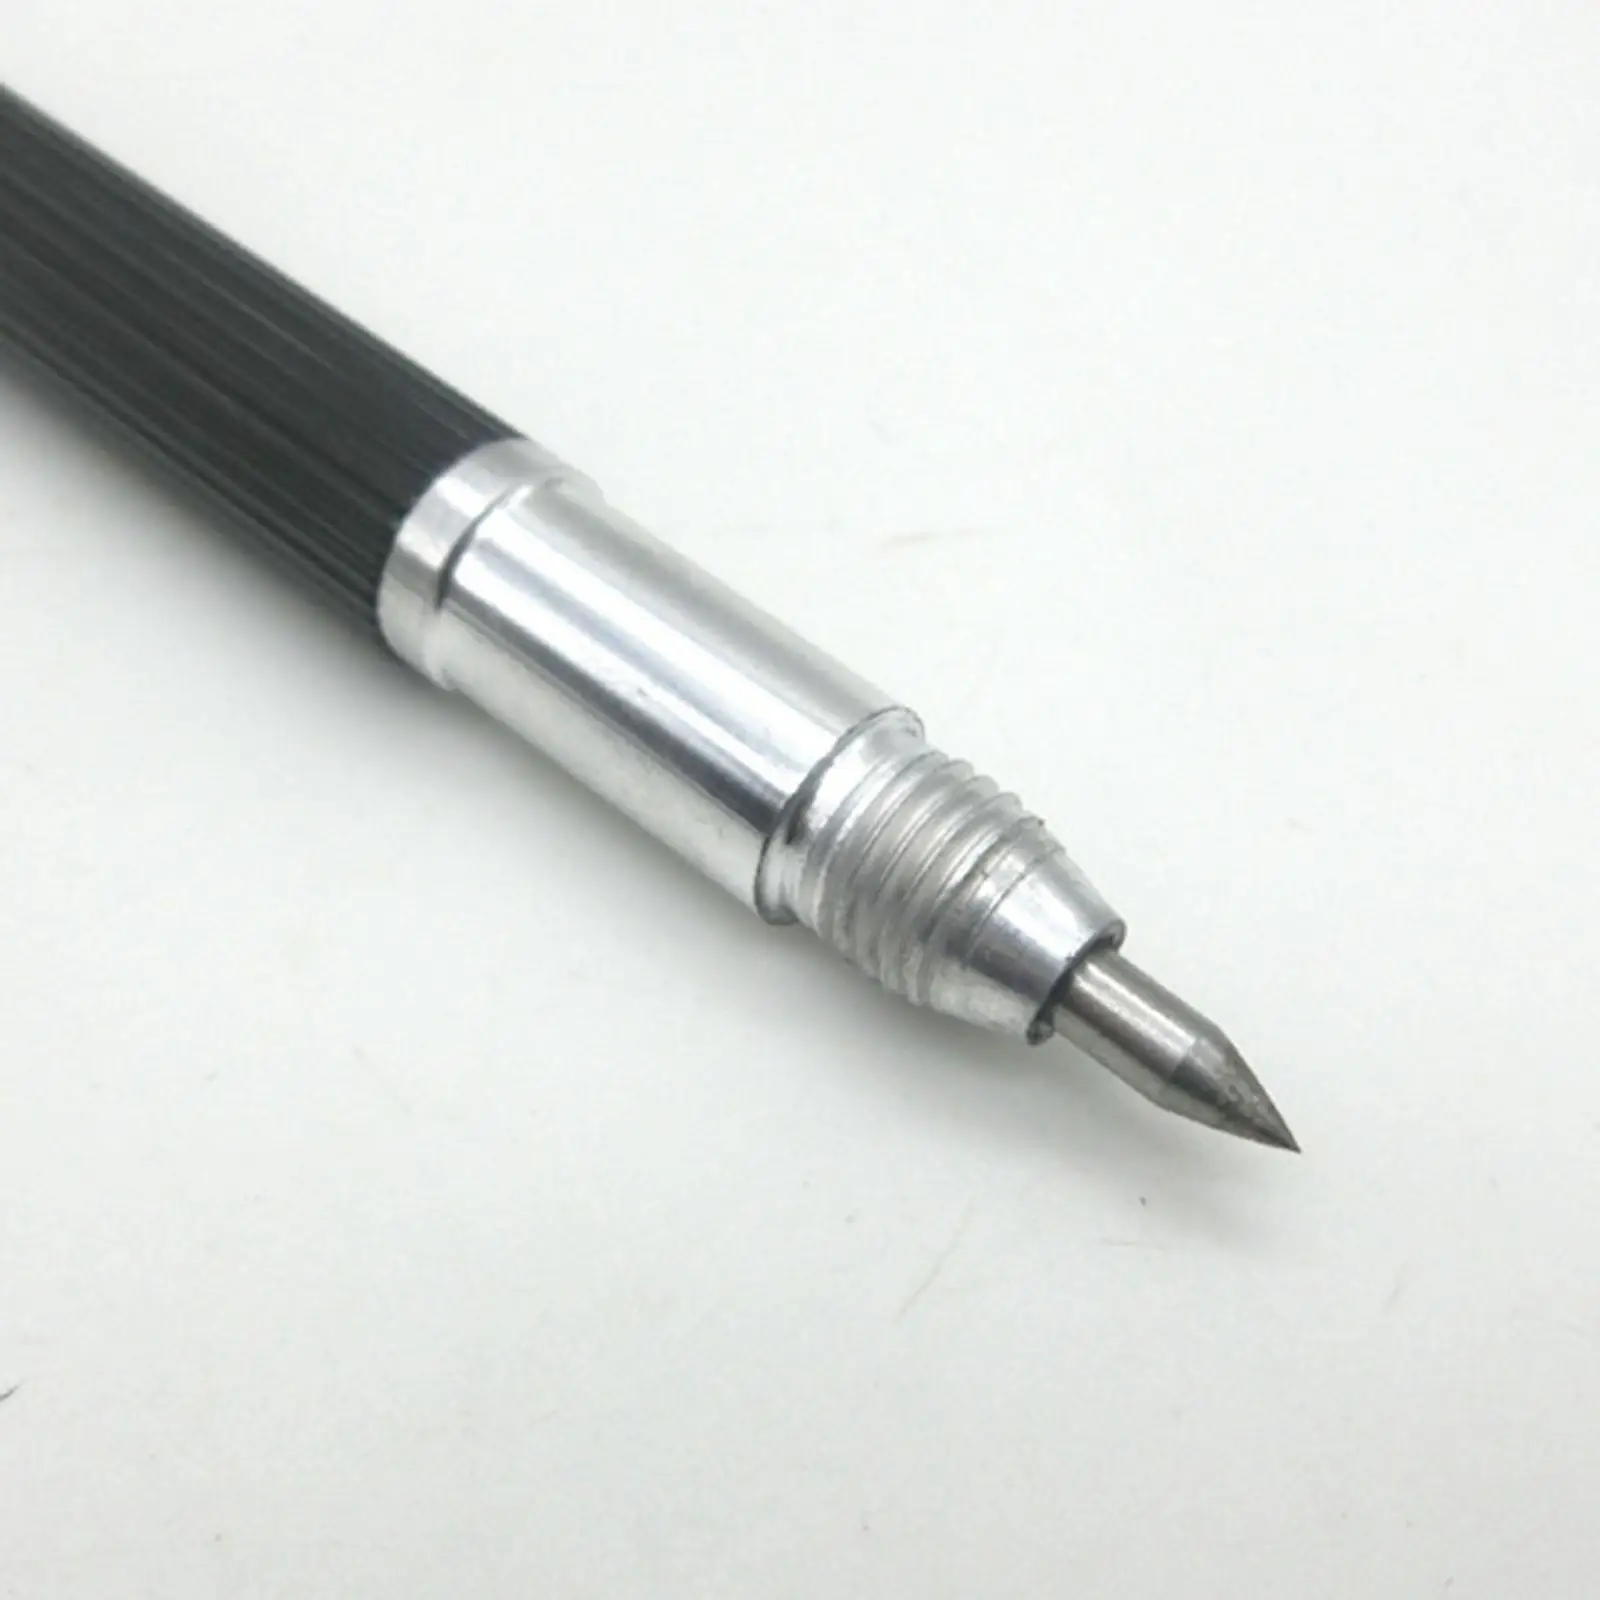 4 Pieces Portable Engraving Pen Double Head Long Head Glass Marker Tungsten Carbide Scribing Pen for Metal Hardened Steel Wood